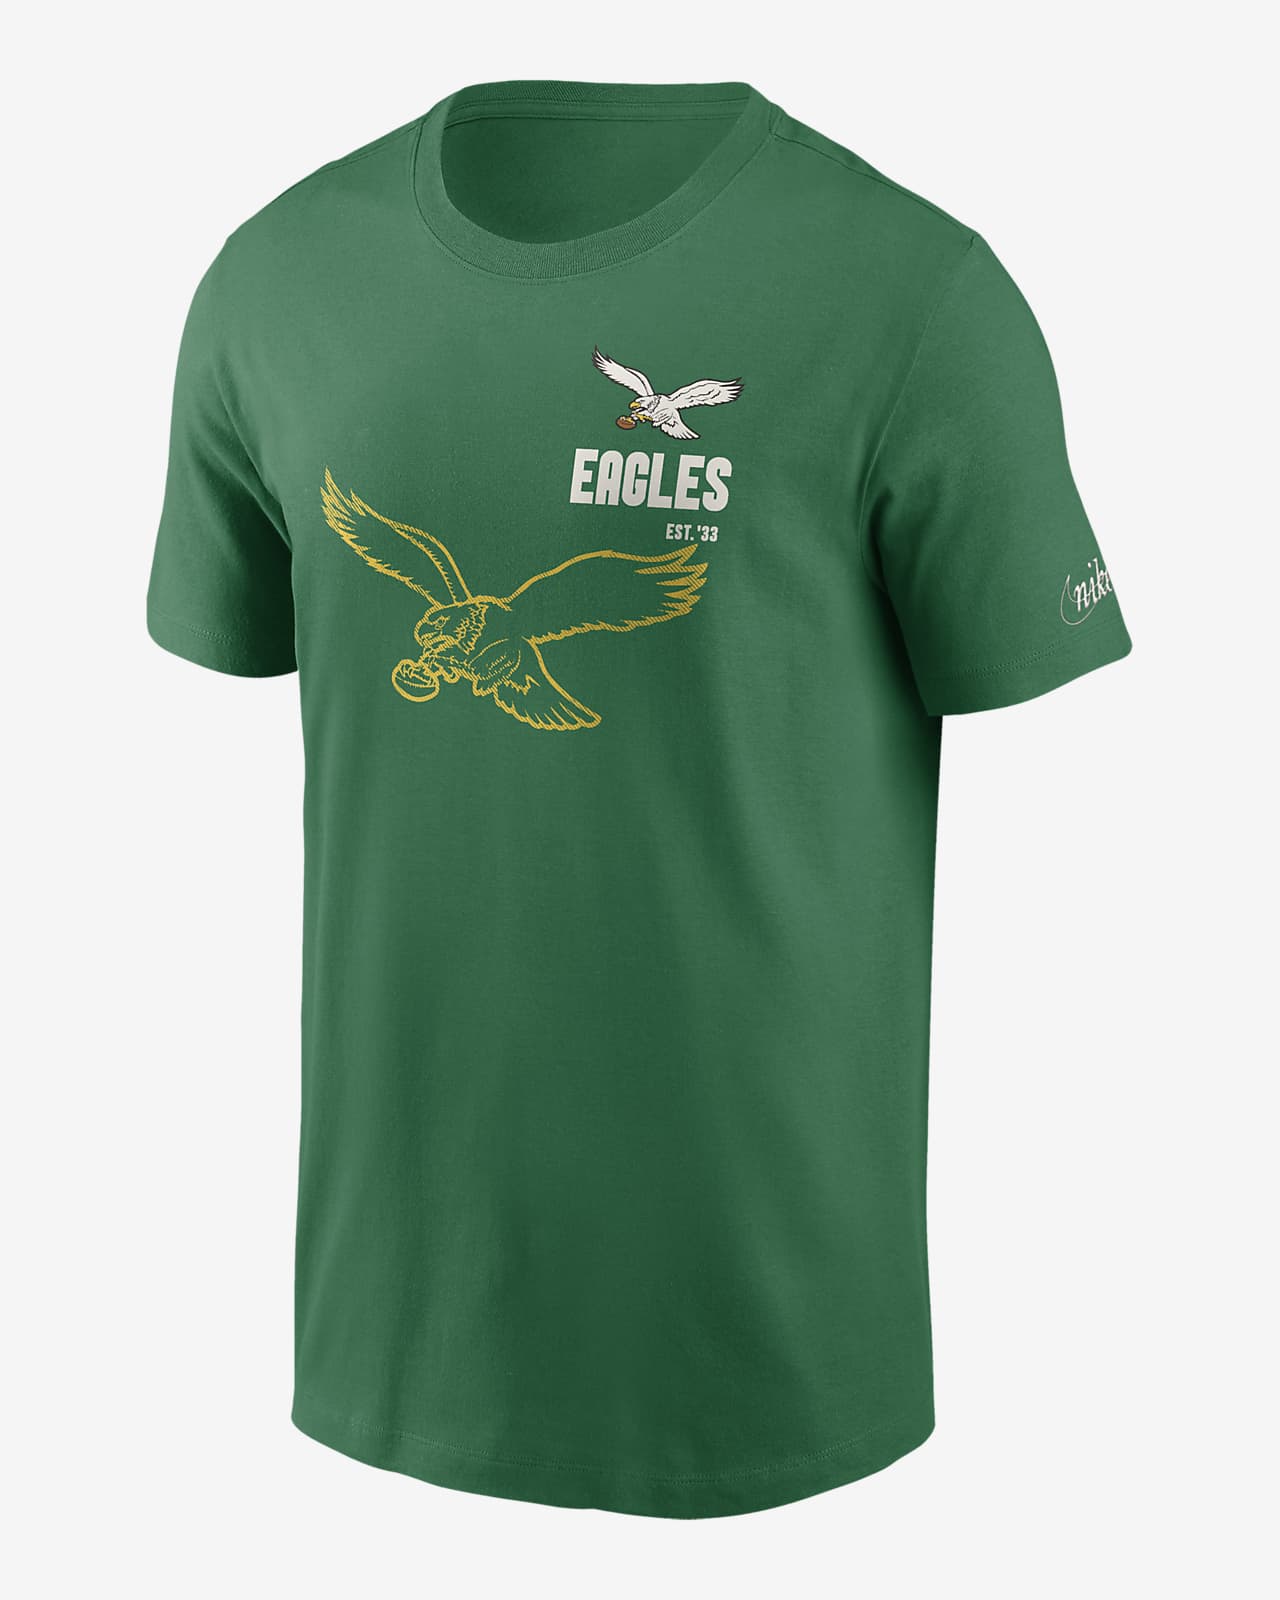 Philadelphia Eagles Logos All Over Print Shirt